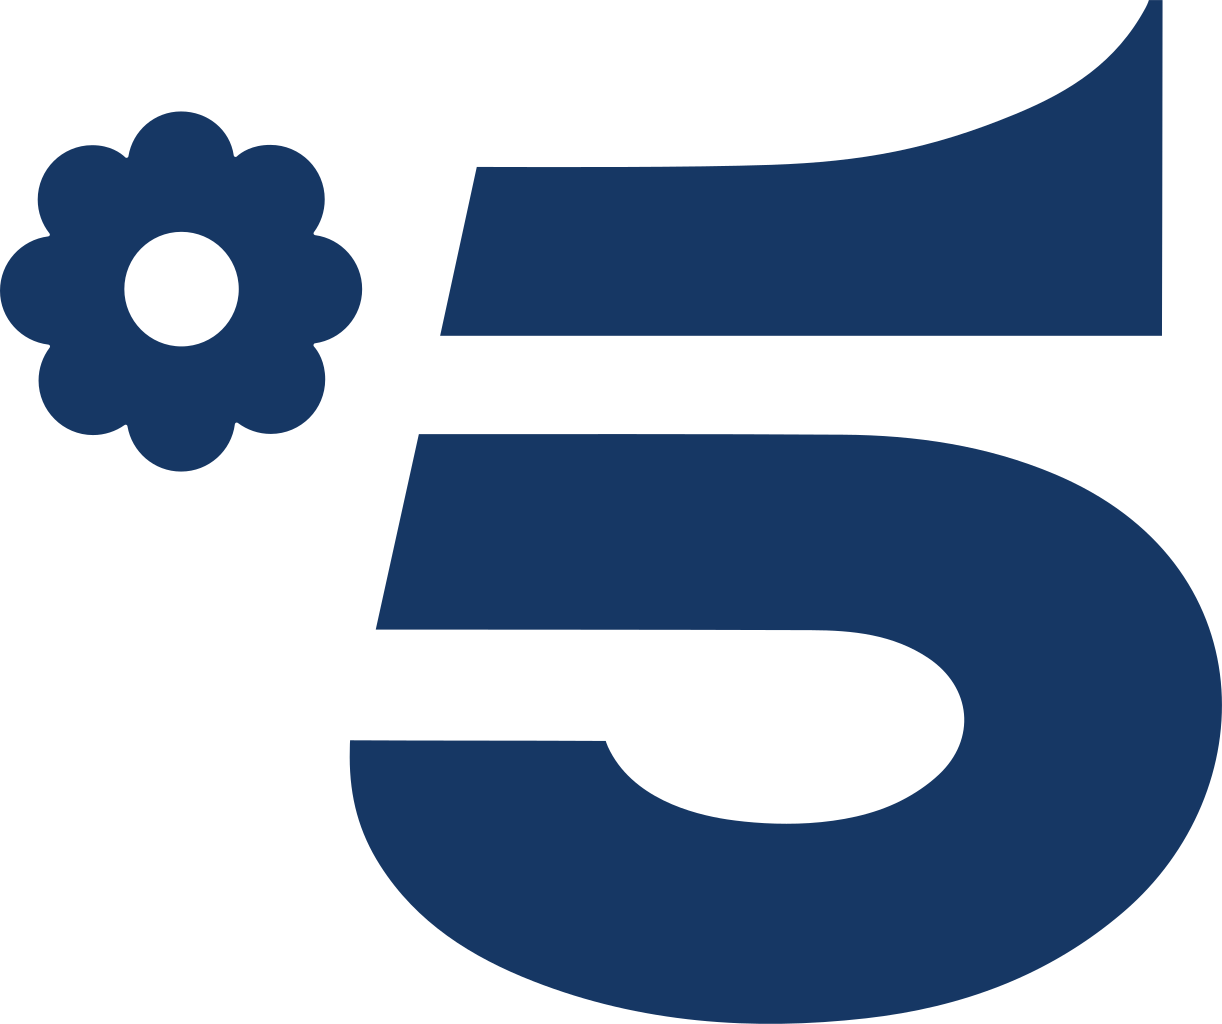 File:Five logo.svg - Wikipedia